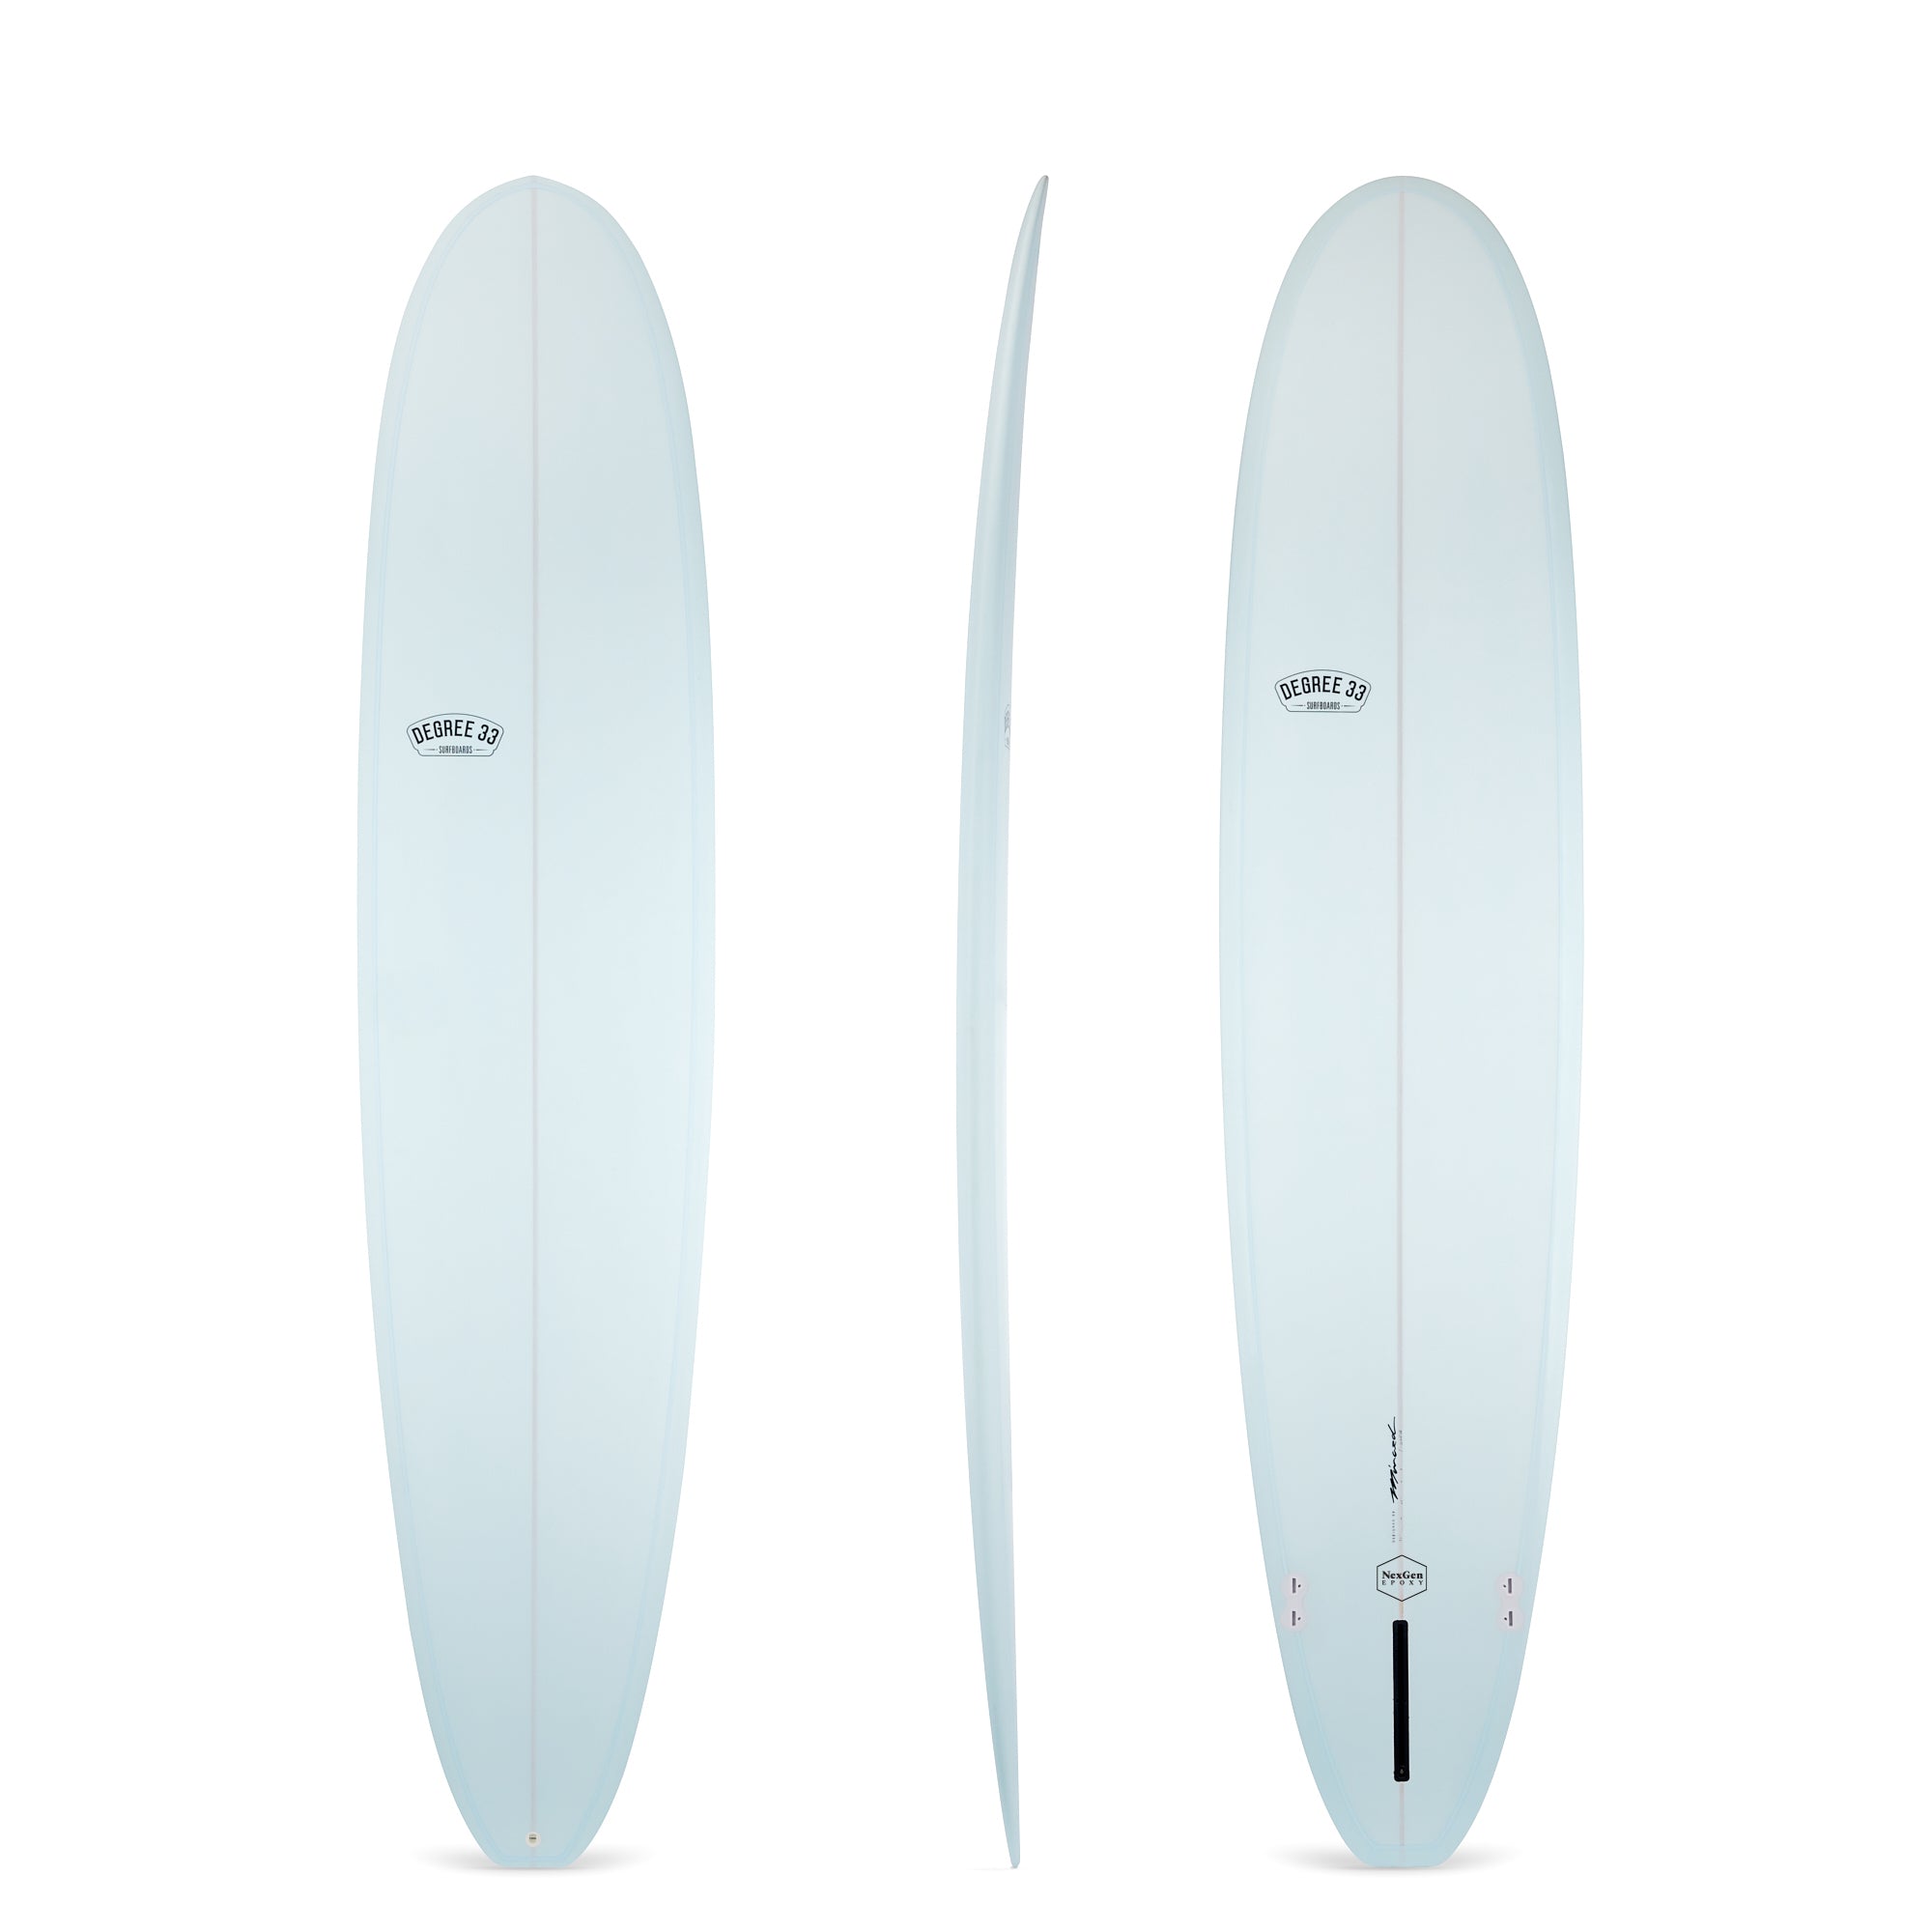 Normalisering efterligne Jeg klager 9' Ultimate Longboard Surfboard Light Blue Resin Tint (NexGen Epoxy) -  Degree 33 Surfboards